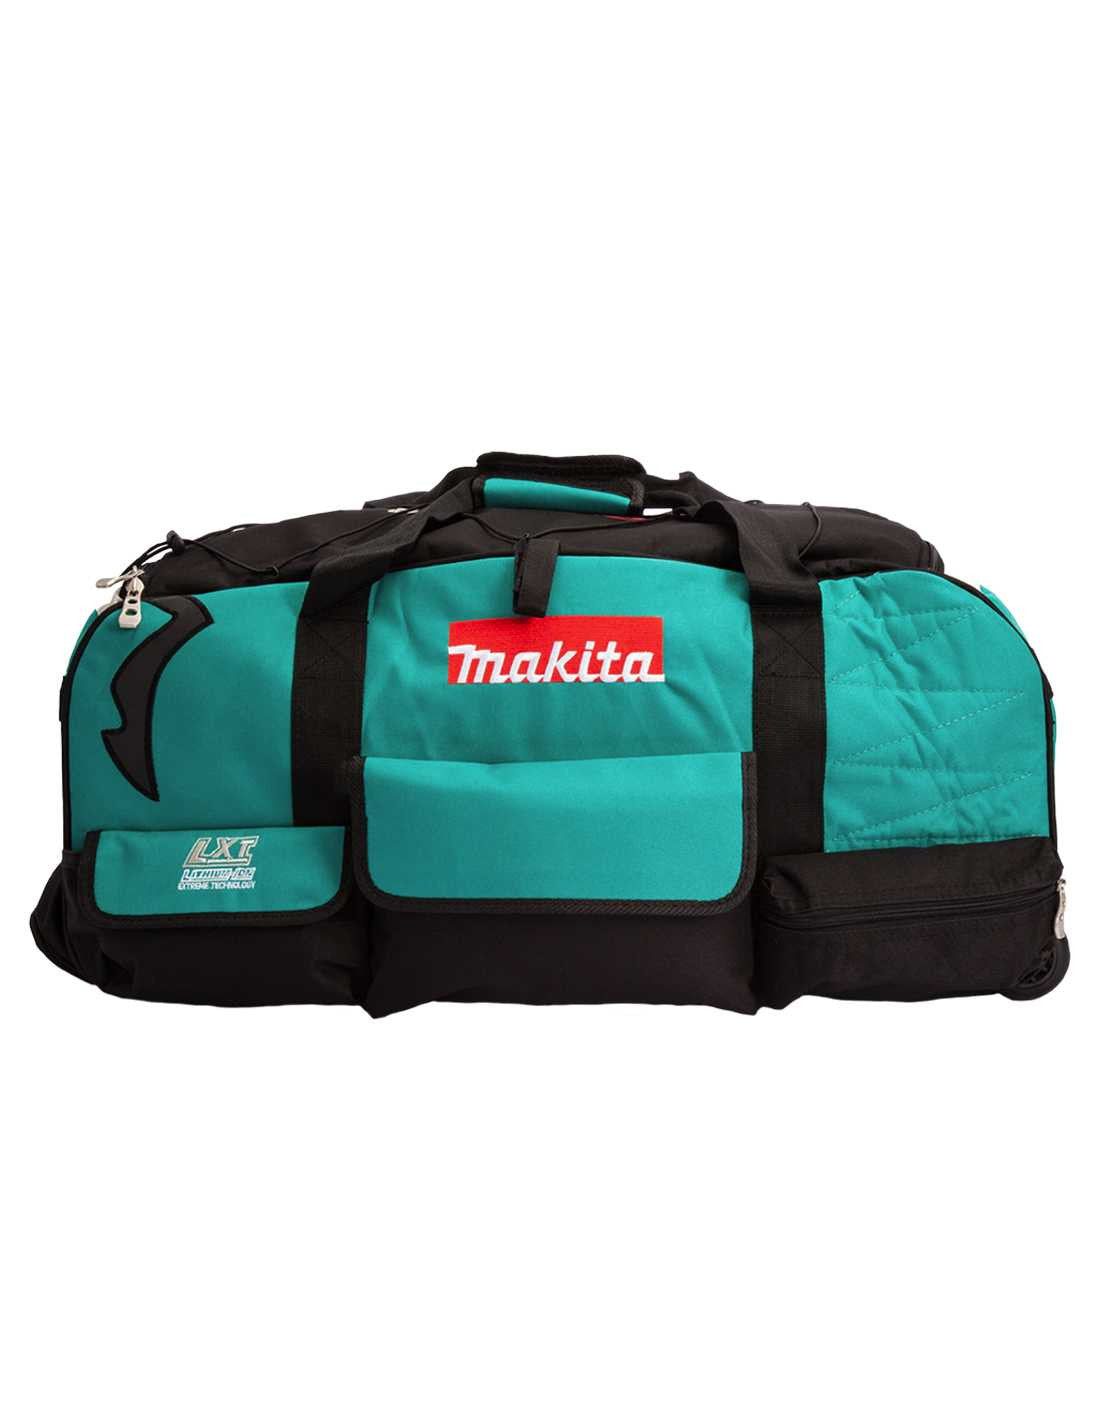 Makita kit with 7 tools + 3bat 5Ah + DC18RC charger + 2 bags DLX7243BL3